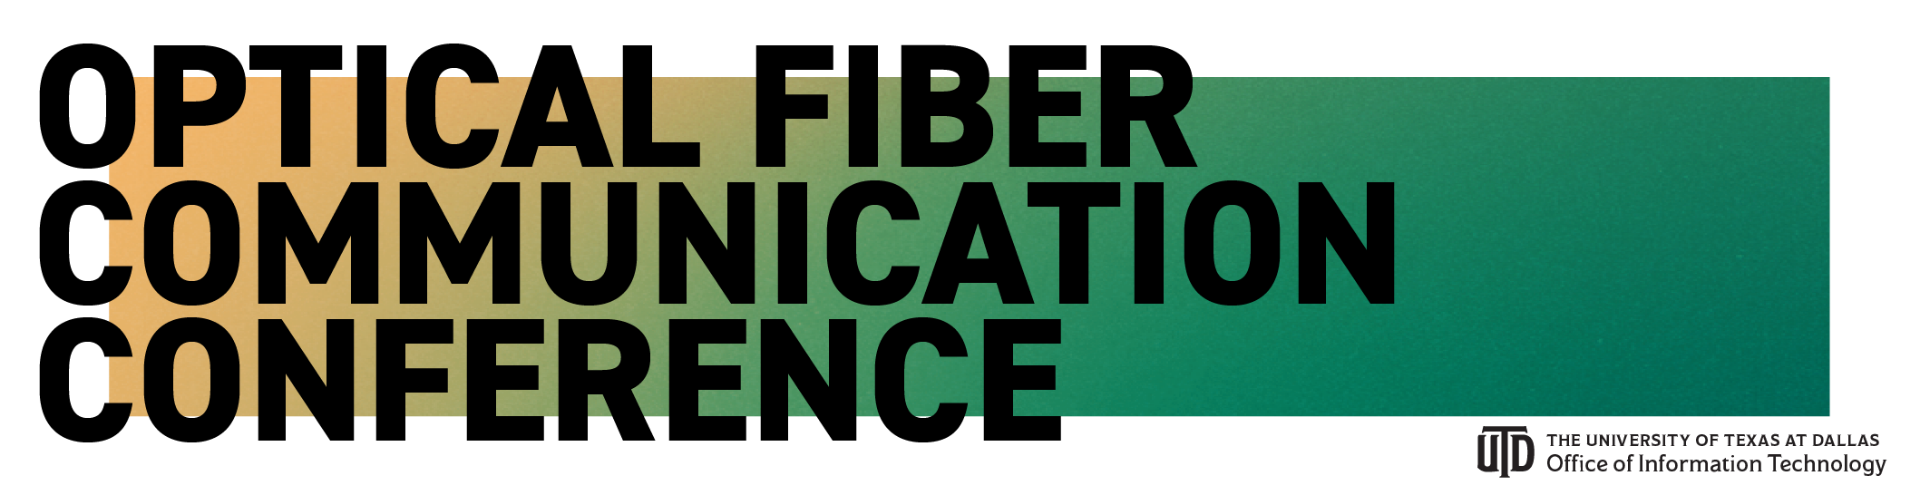 Optical Fiber Communication Conferenc